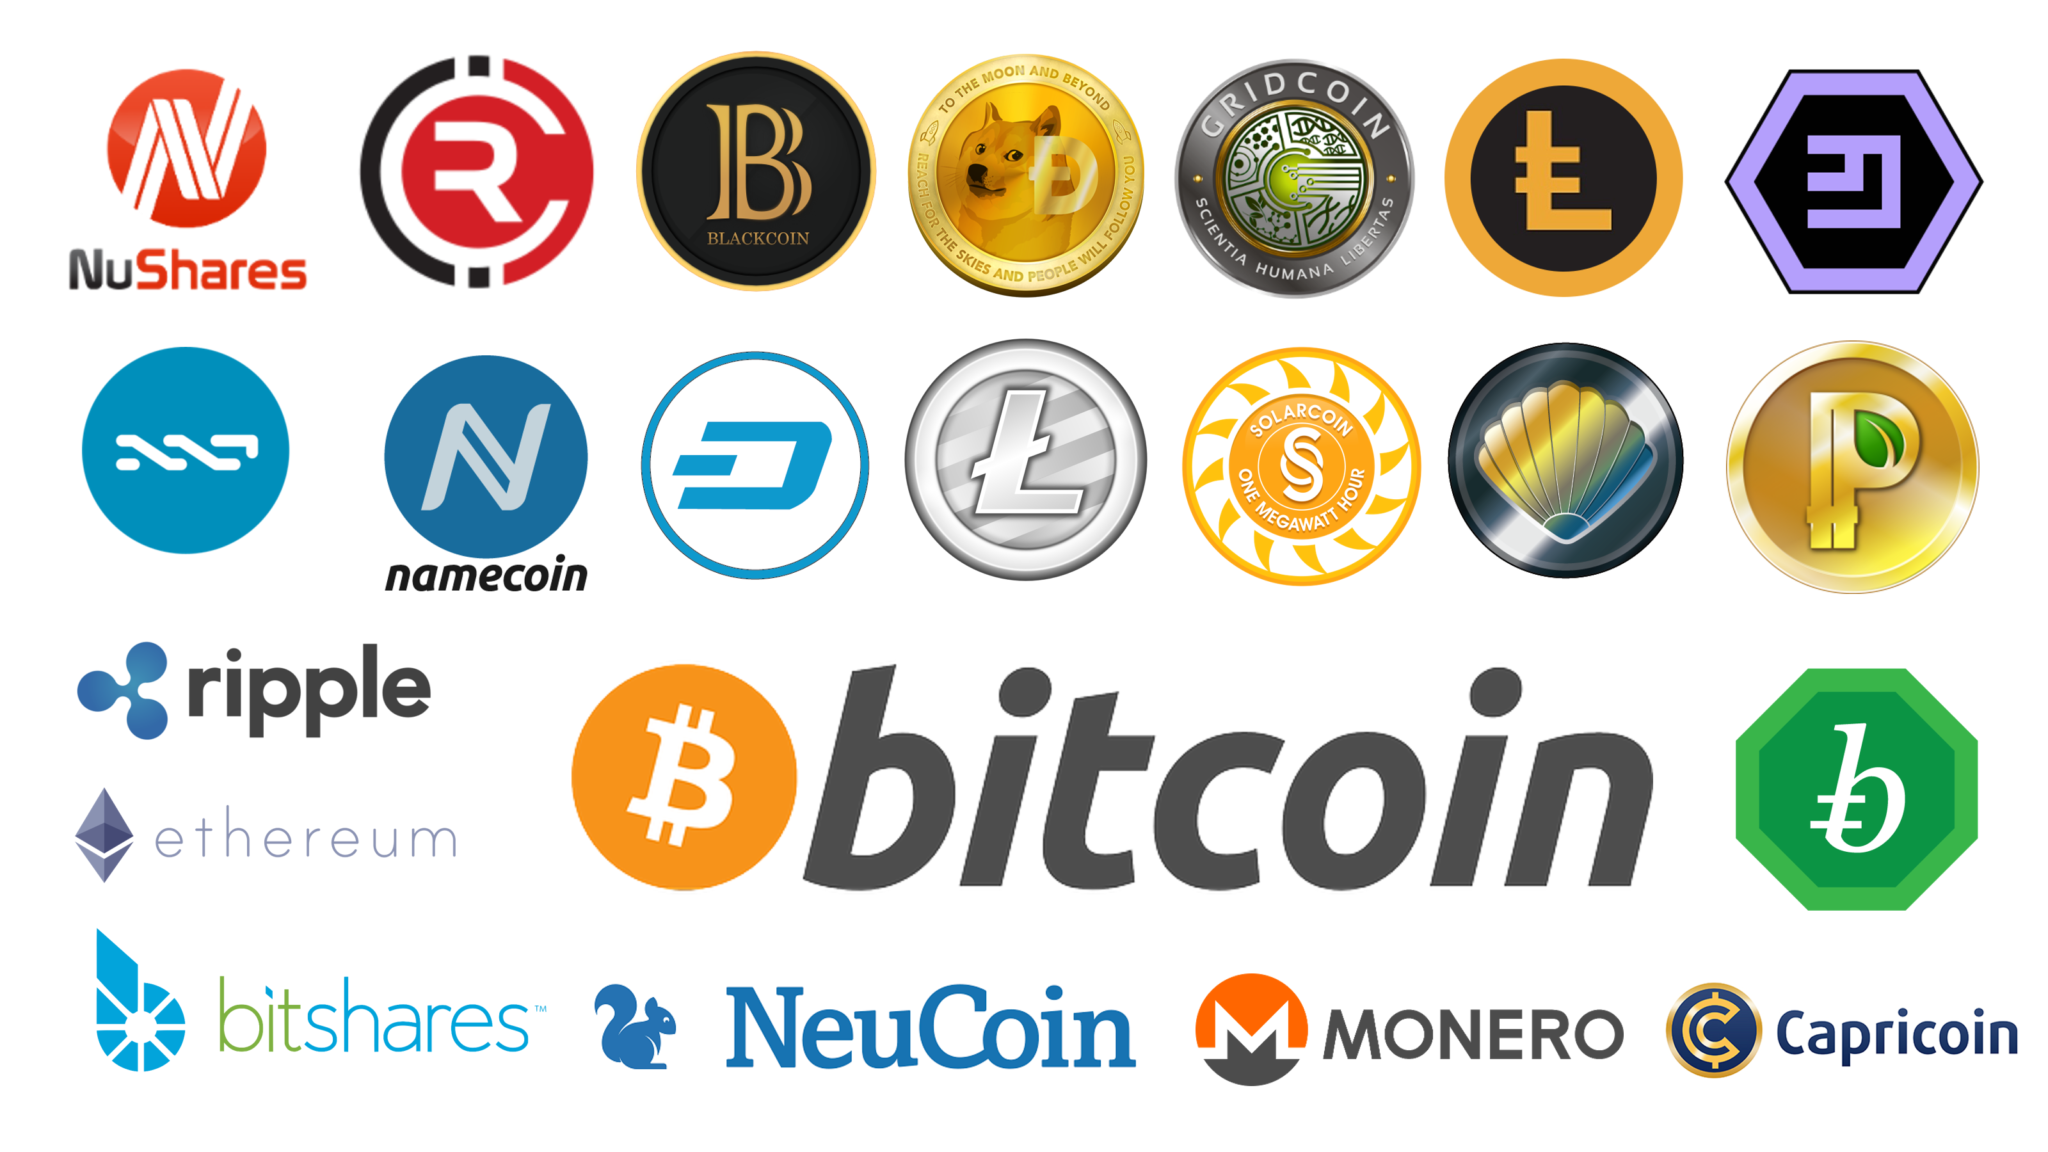 Naming et fonction des Cryptos-monnaies : bitcoin, ethereum, ripple ...